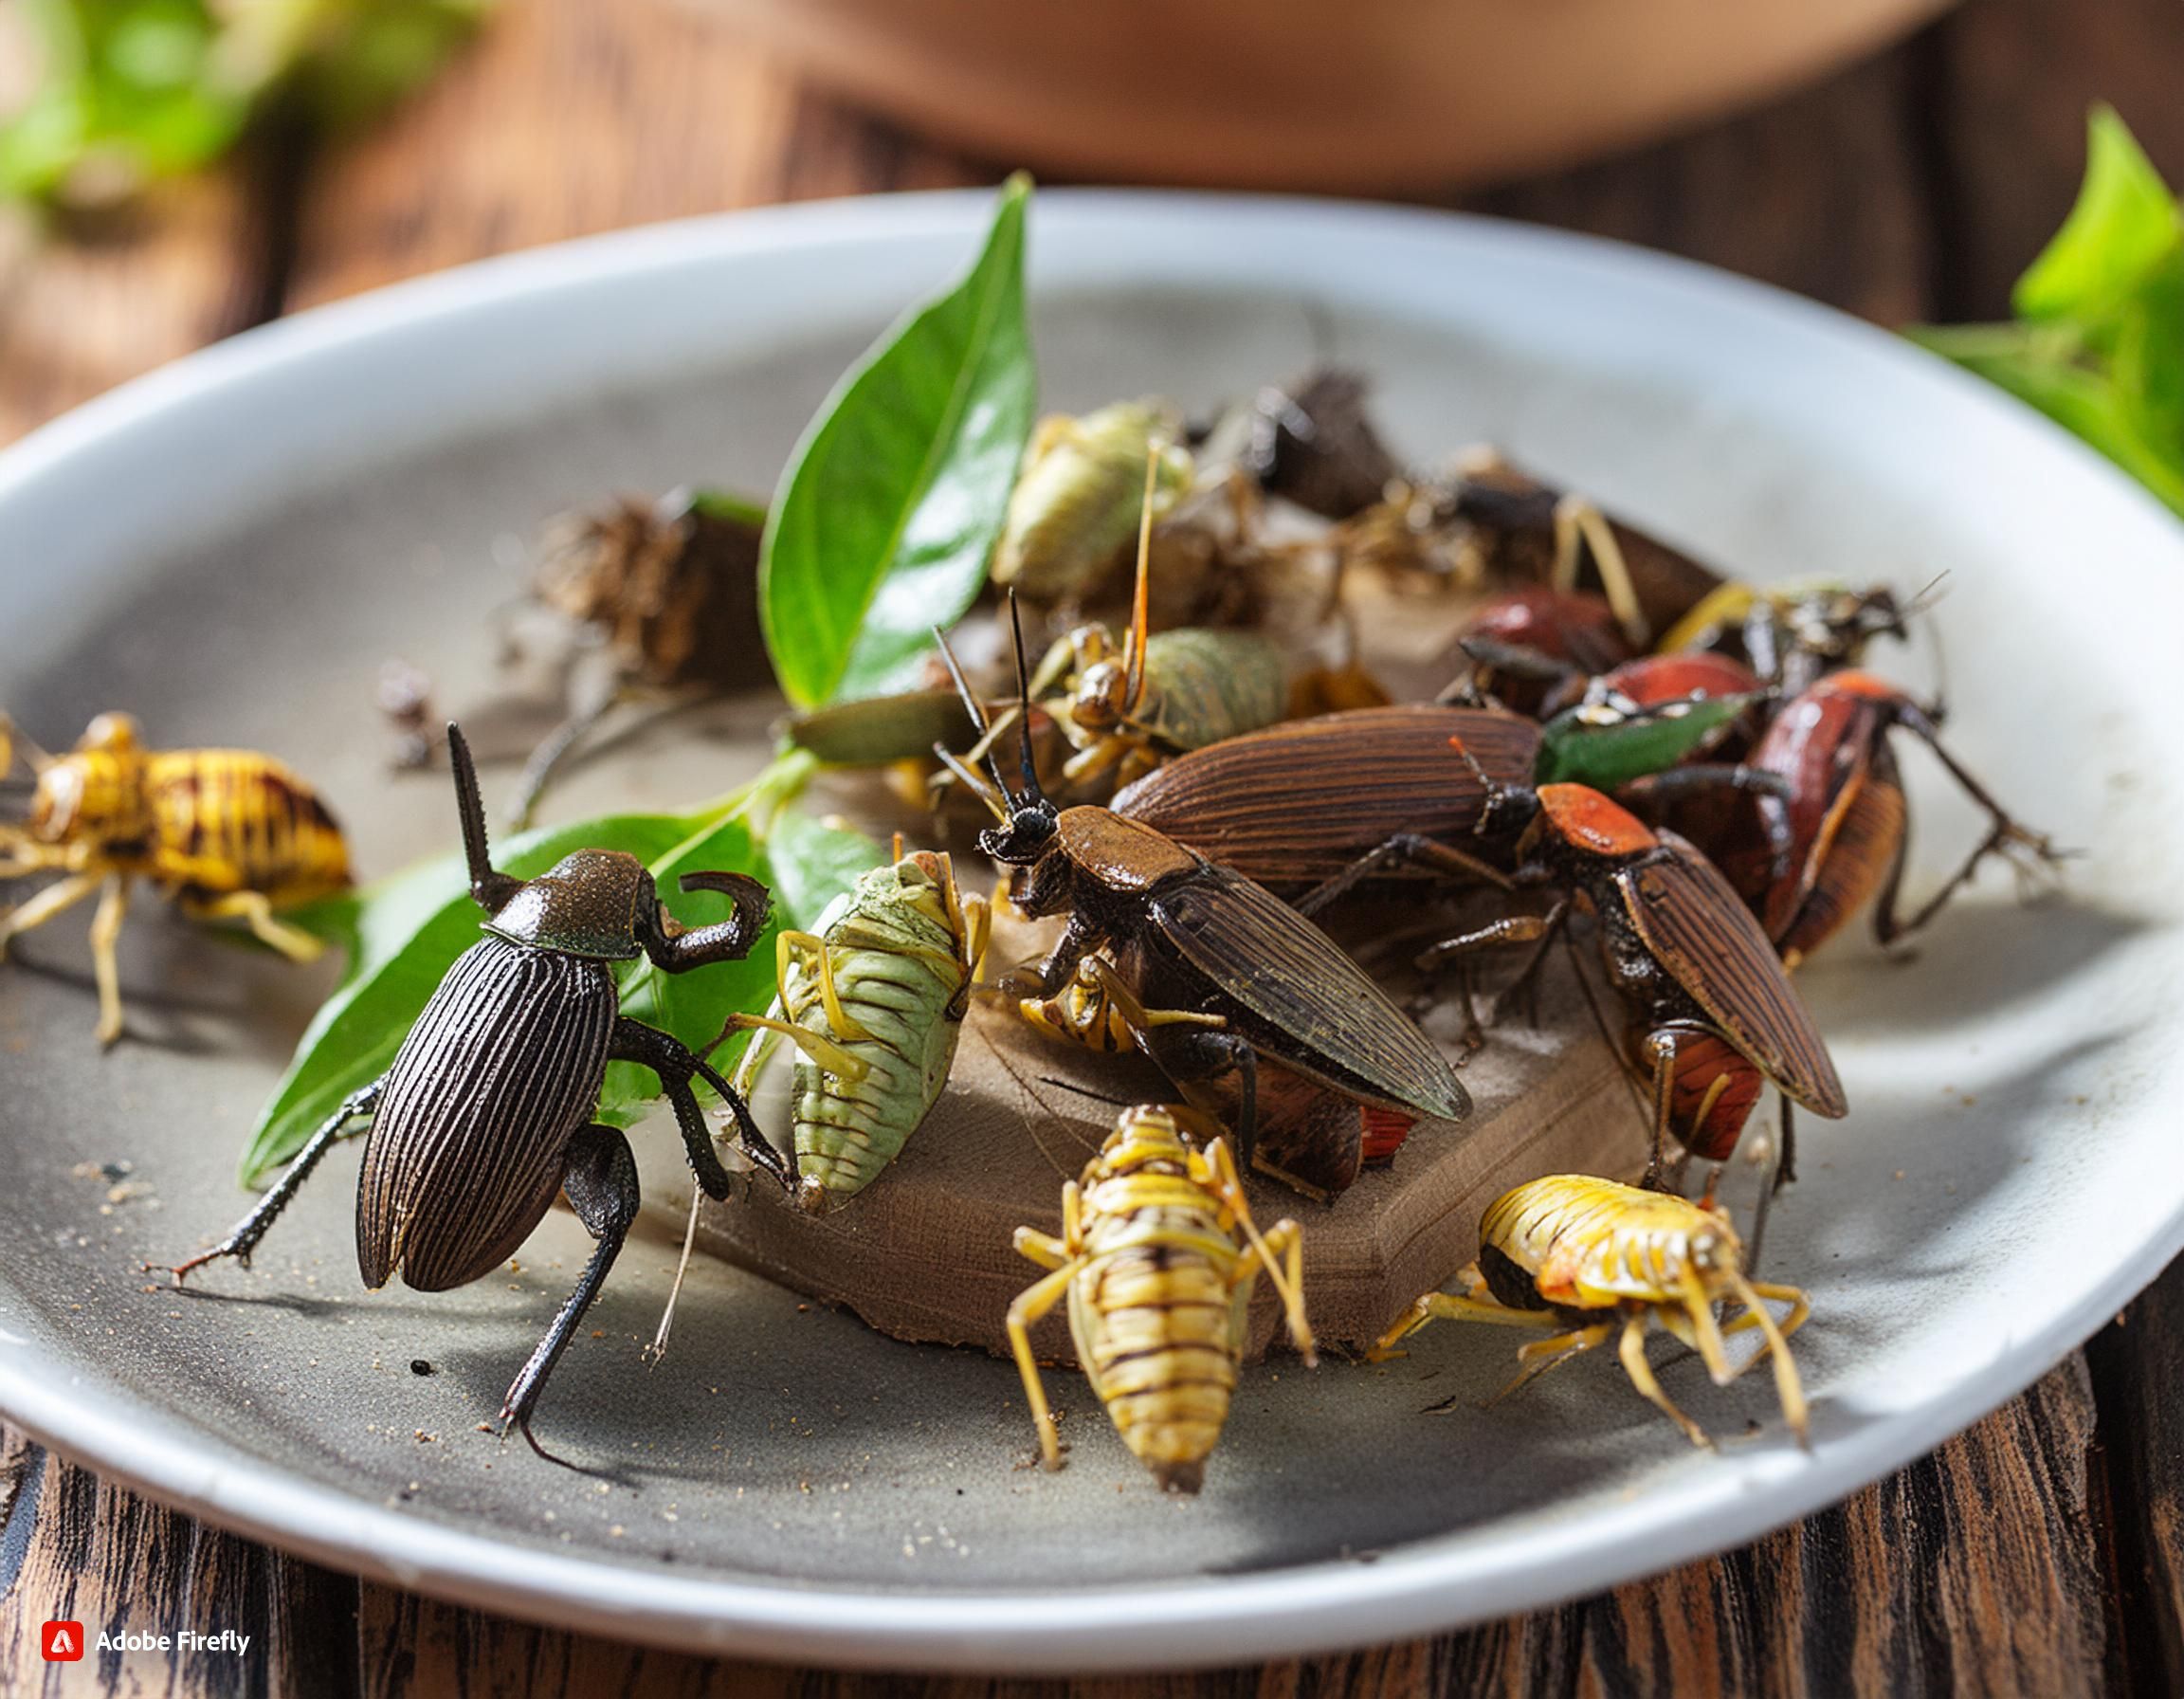 Alimentación con insectos: ¿Tabú o futuro prometedor?